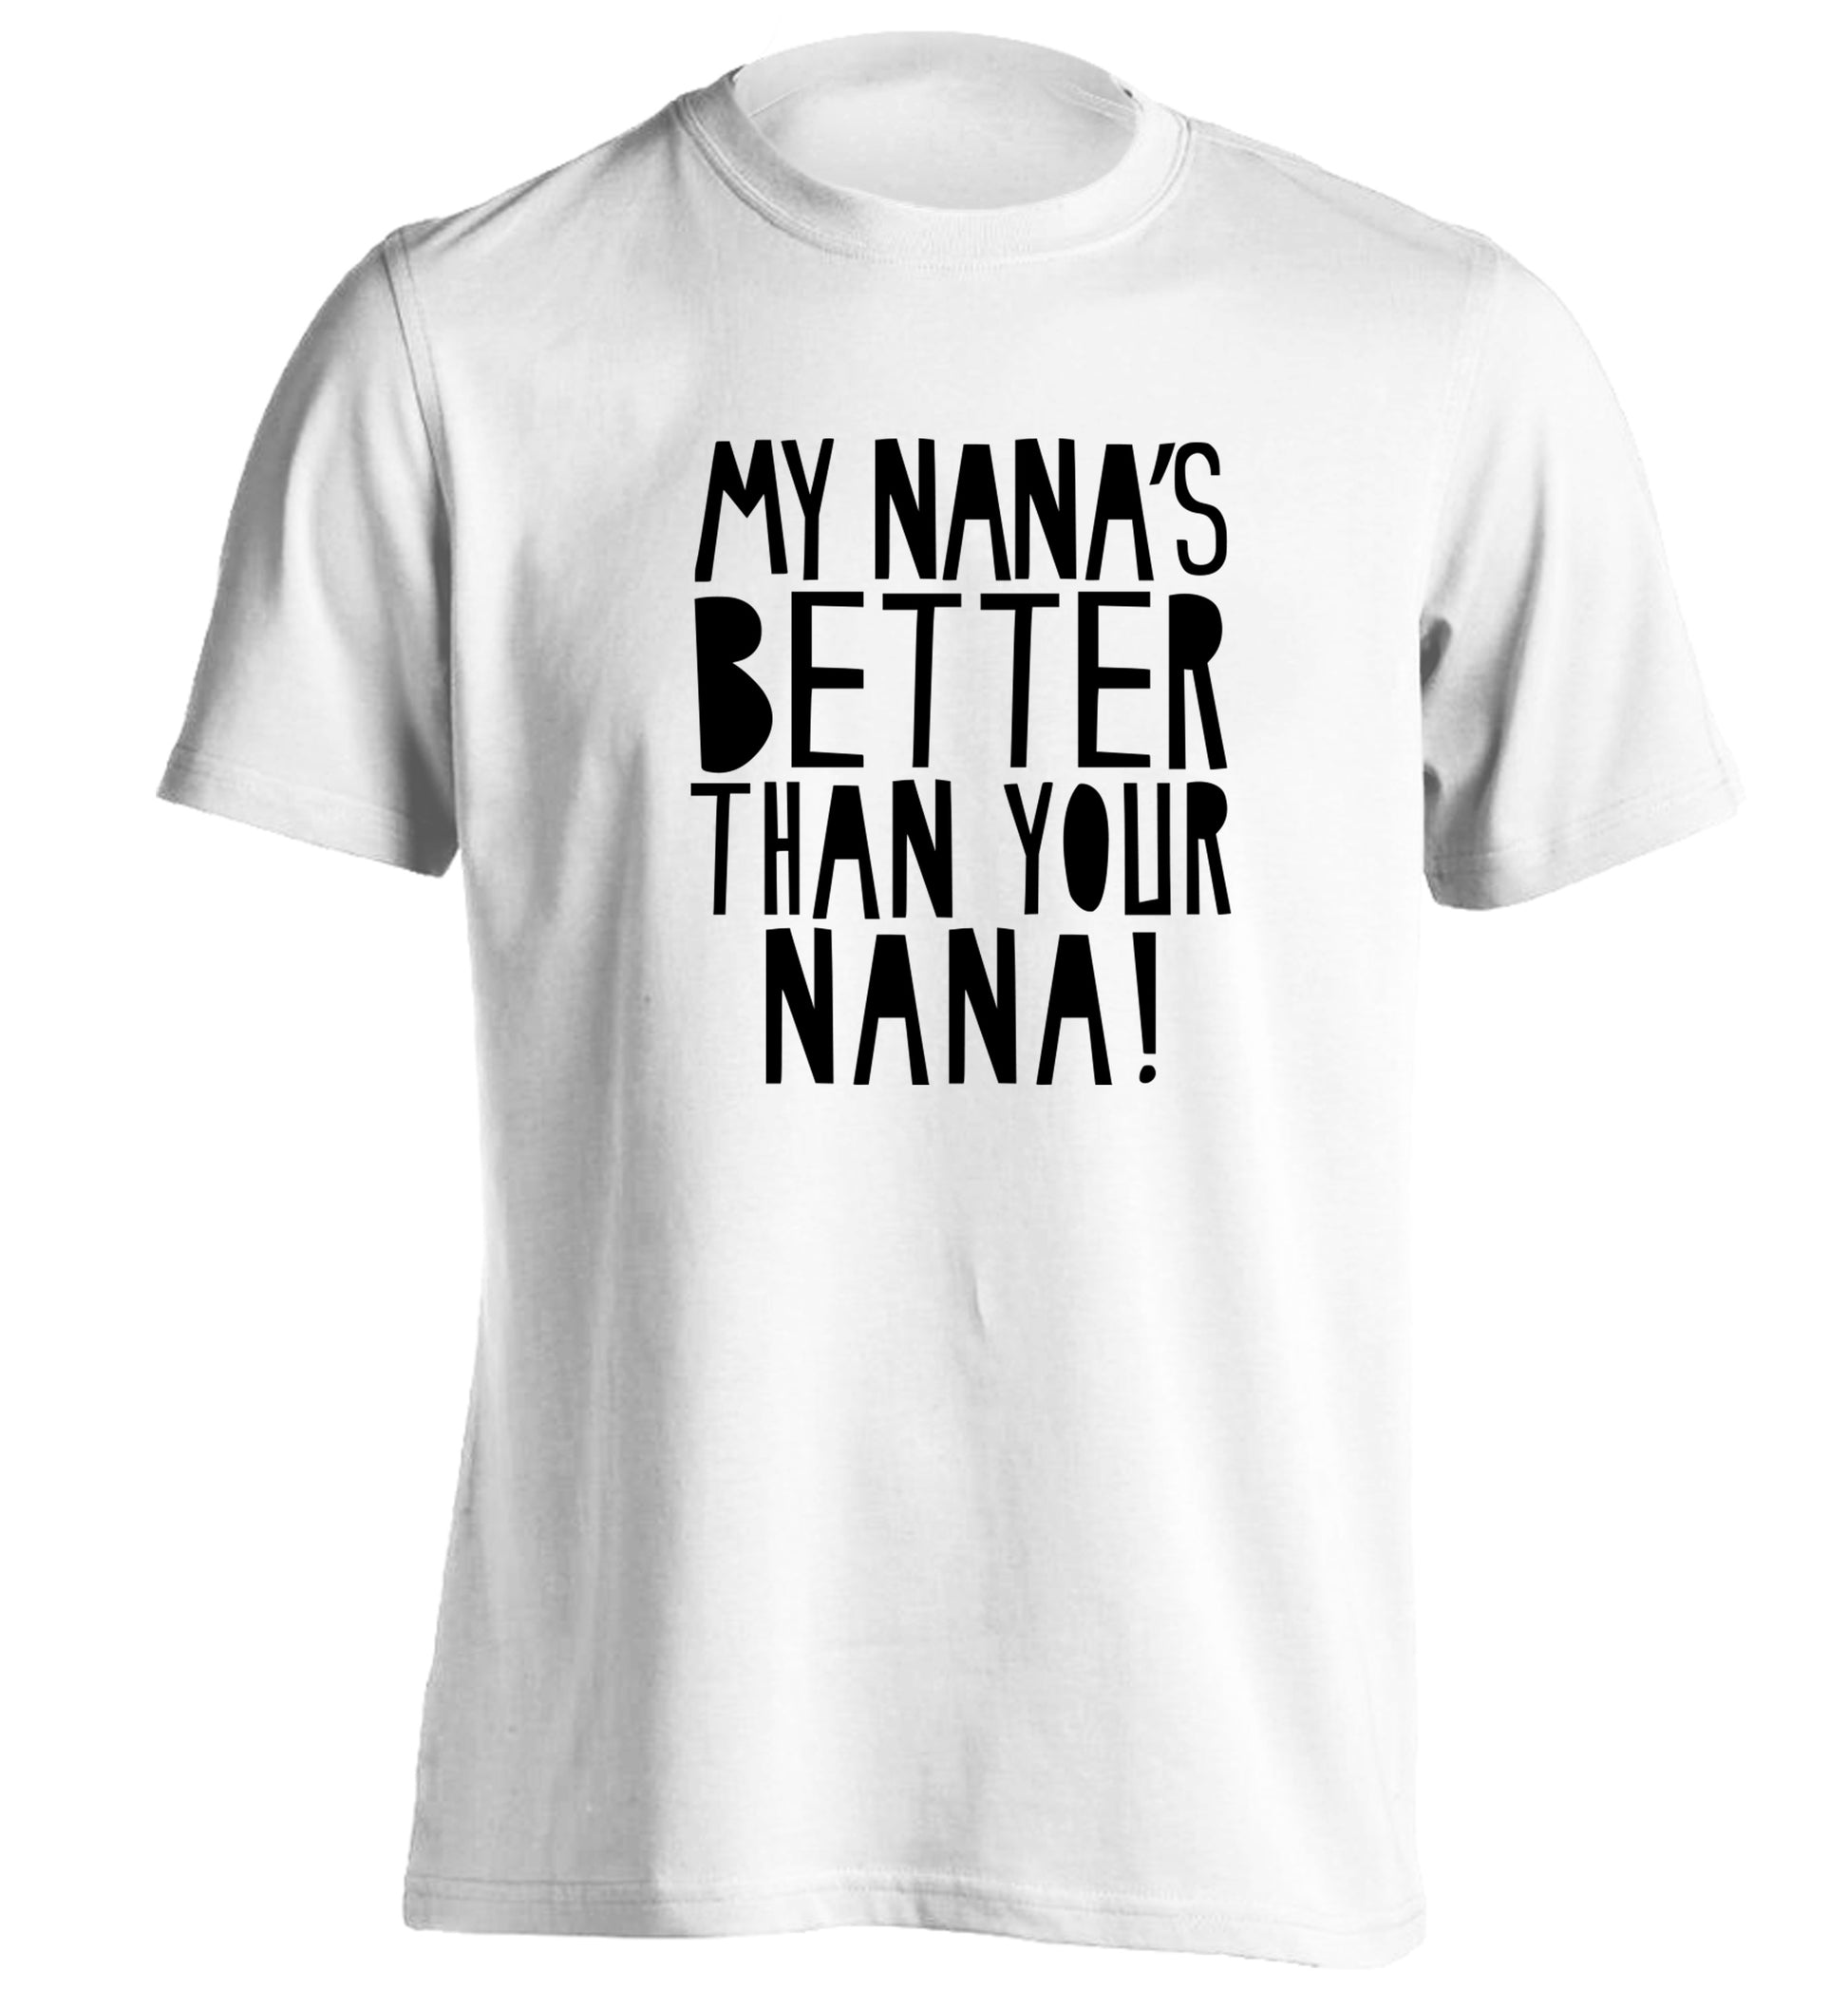 My nana's better than your nana adults unisex white Tshirt 2XL